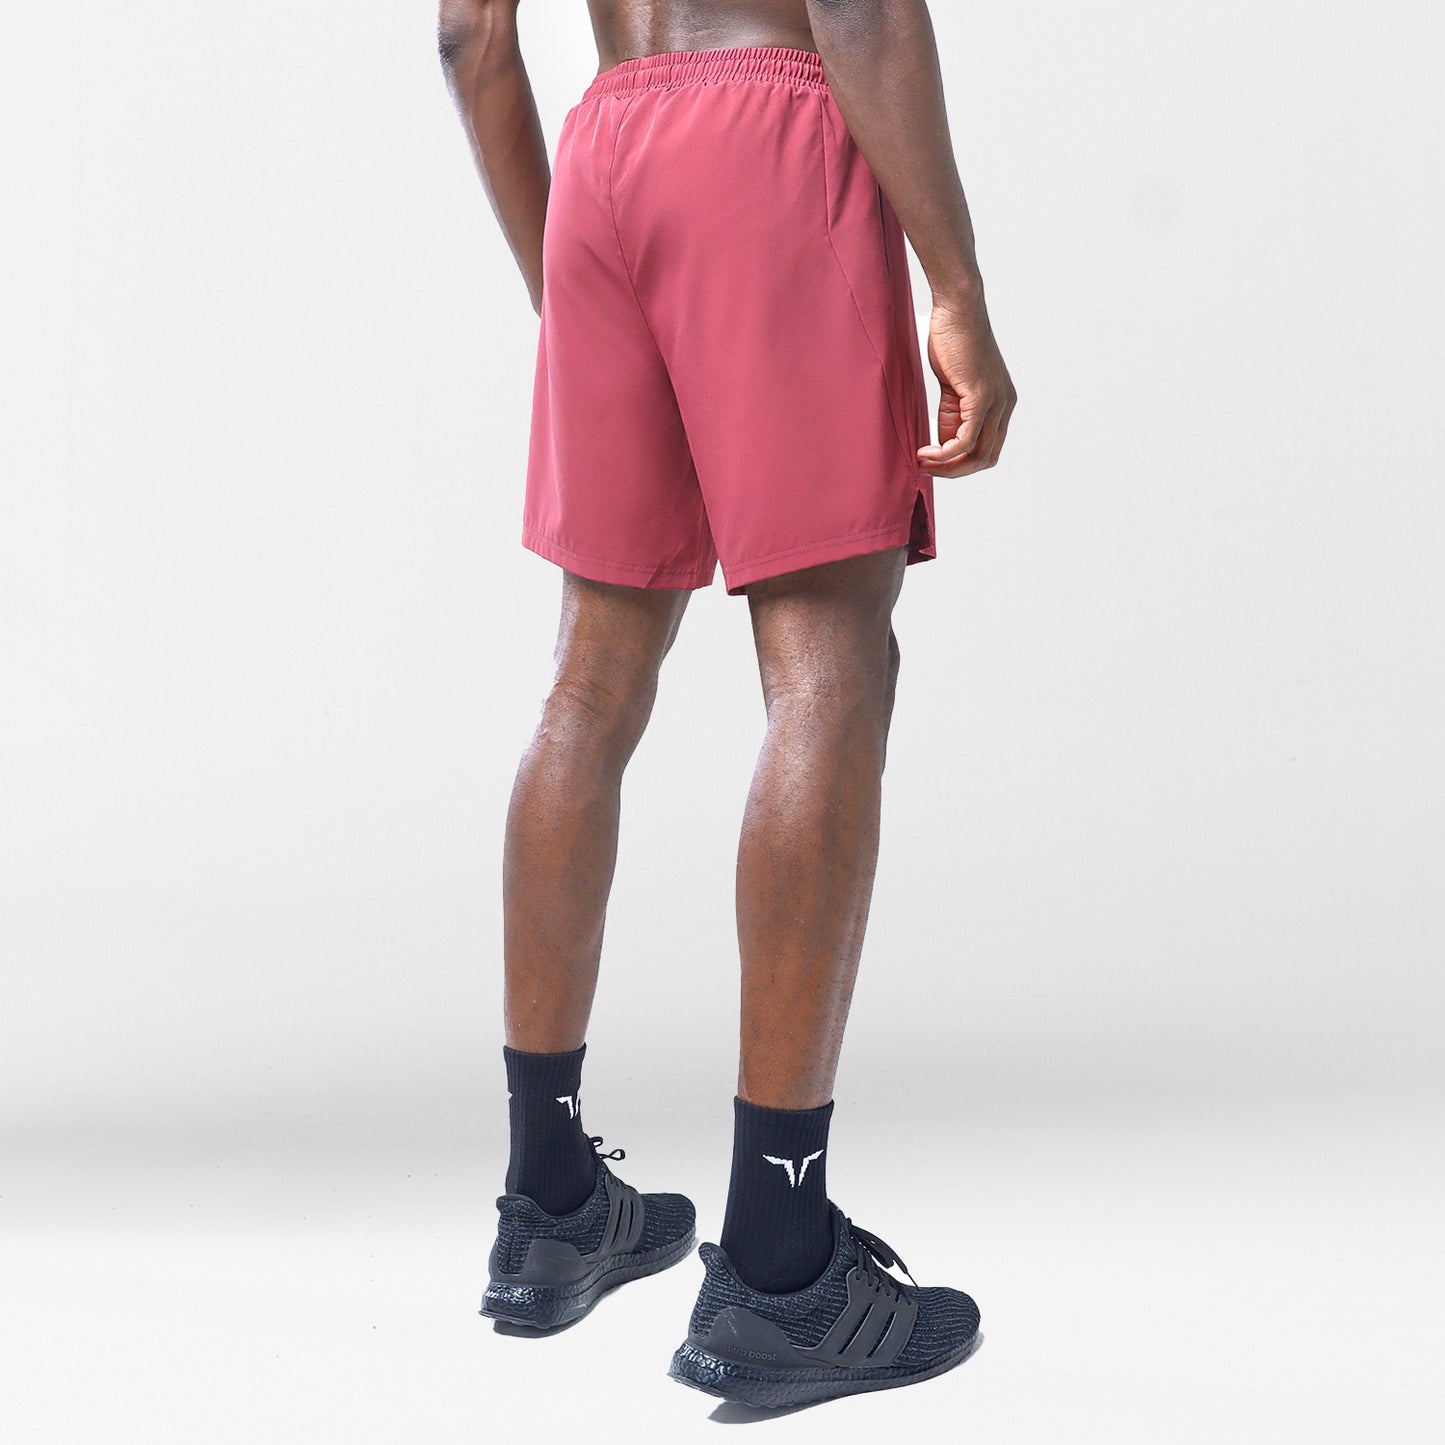 squatwolf-gym-wear-essential-gym-7-inch-shorts-burgundy-workout-short-for-men